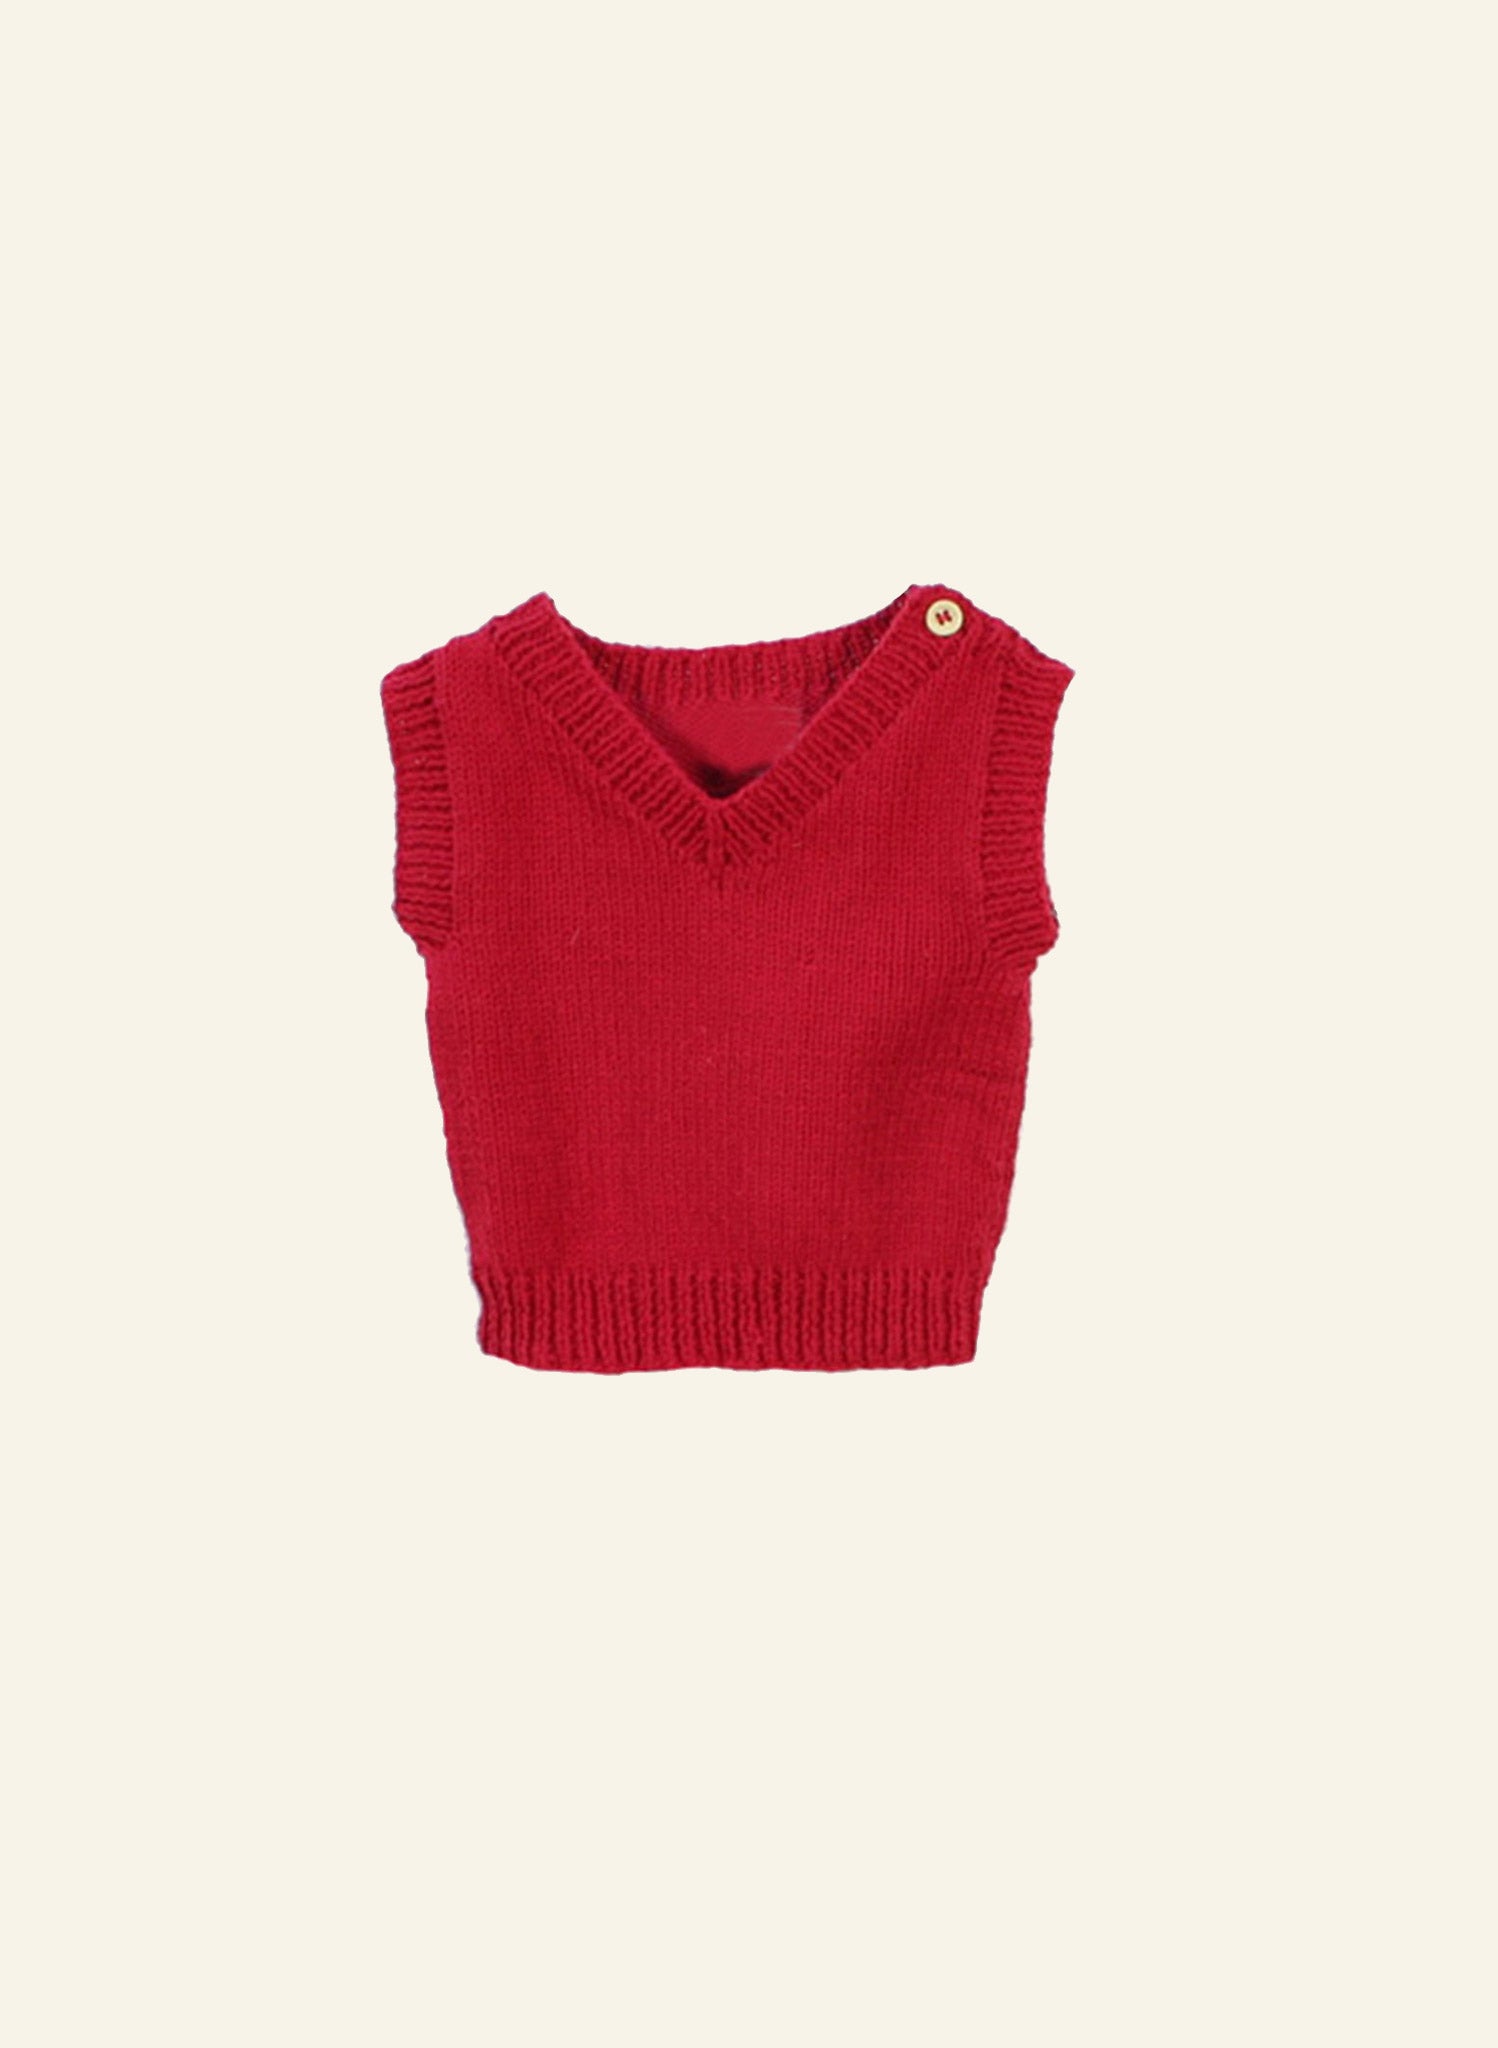 Children's Tank Top - Red Cotton